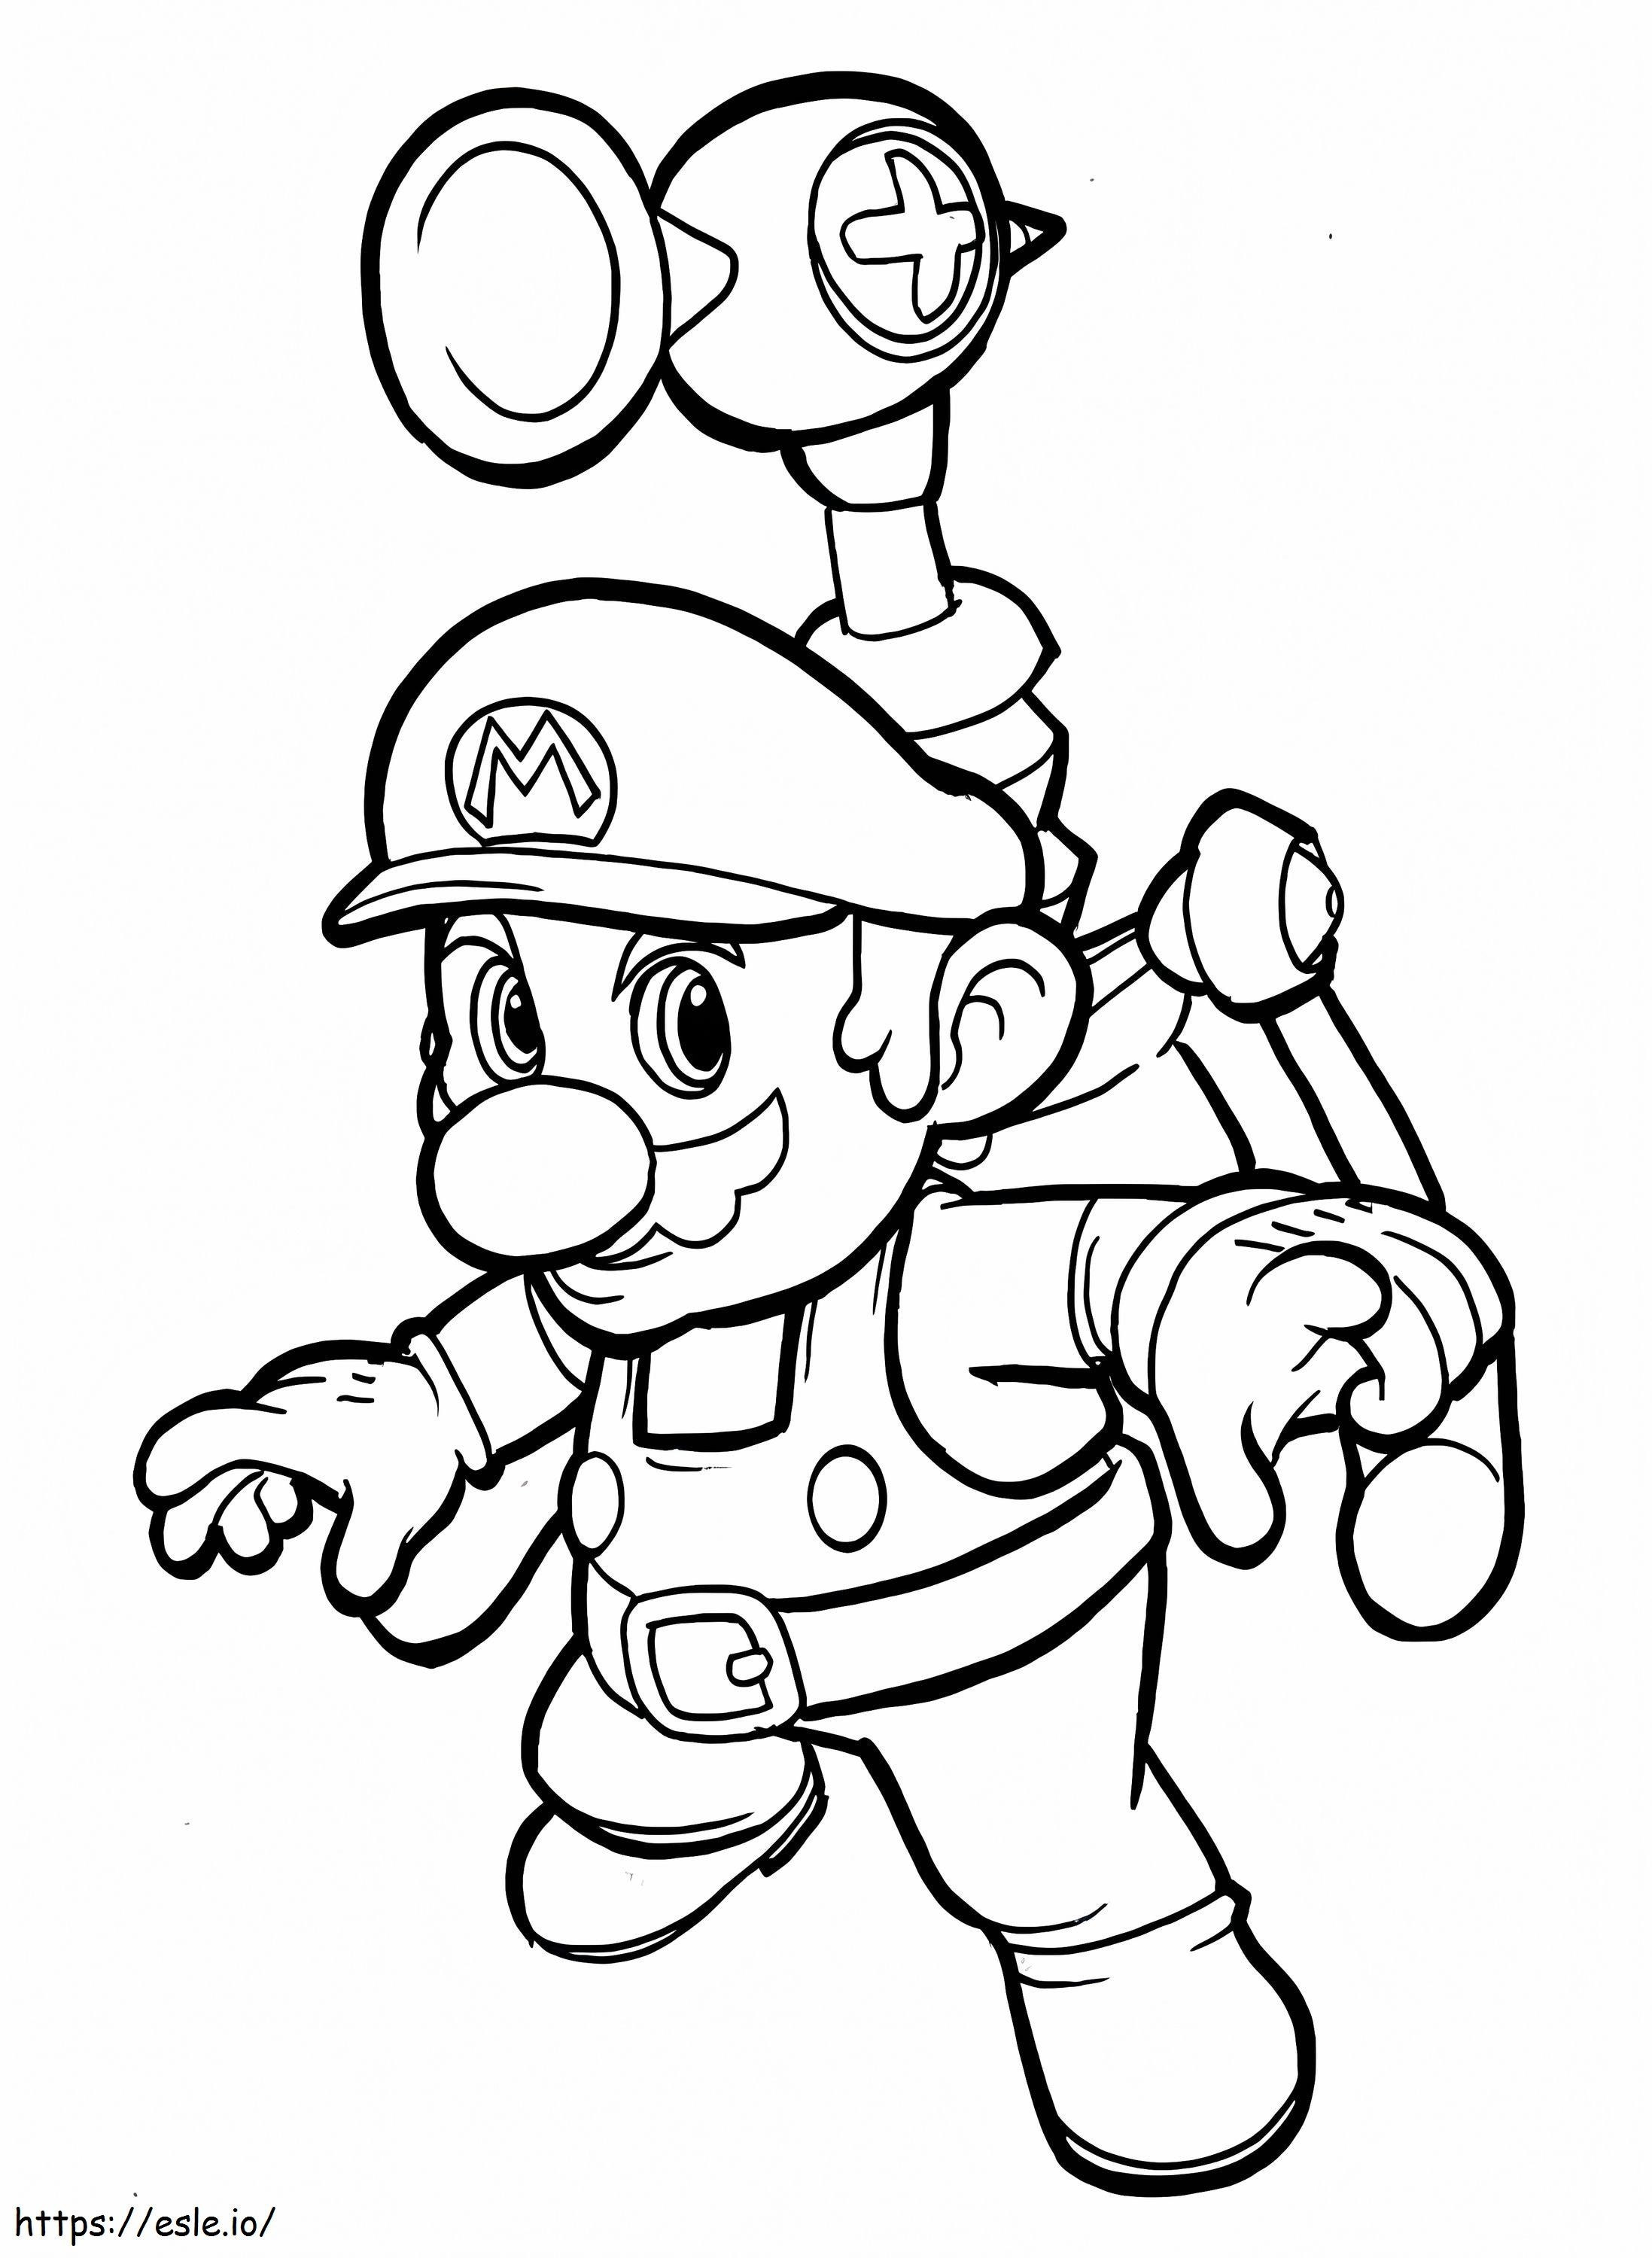 Super Mario 1 de colorat